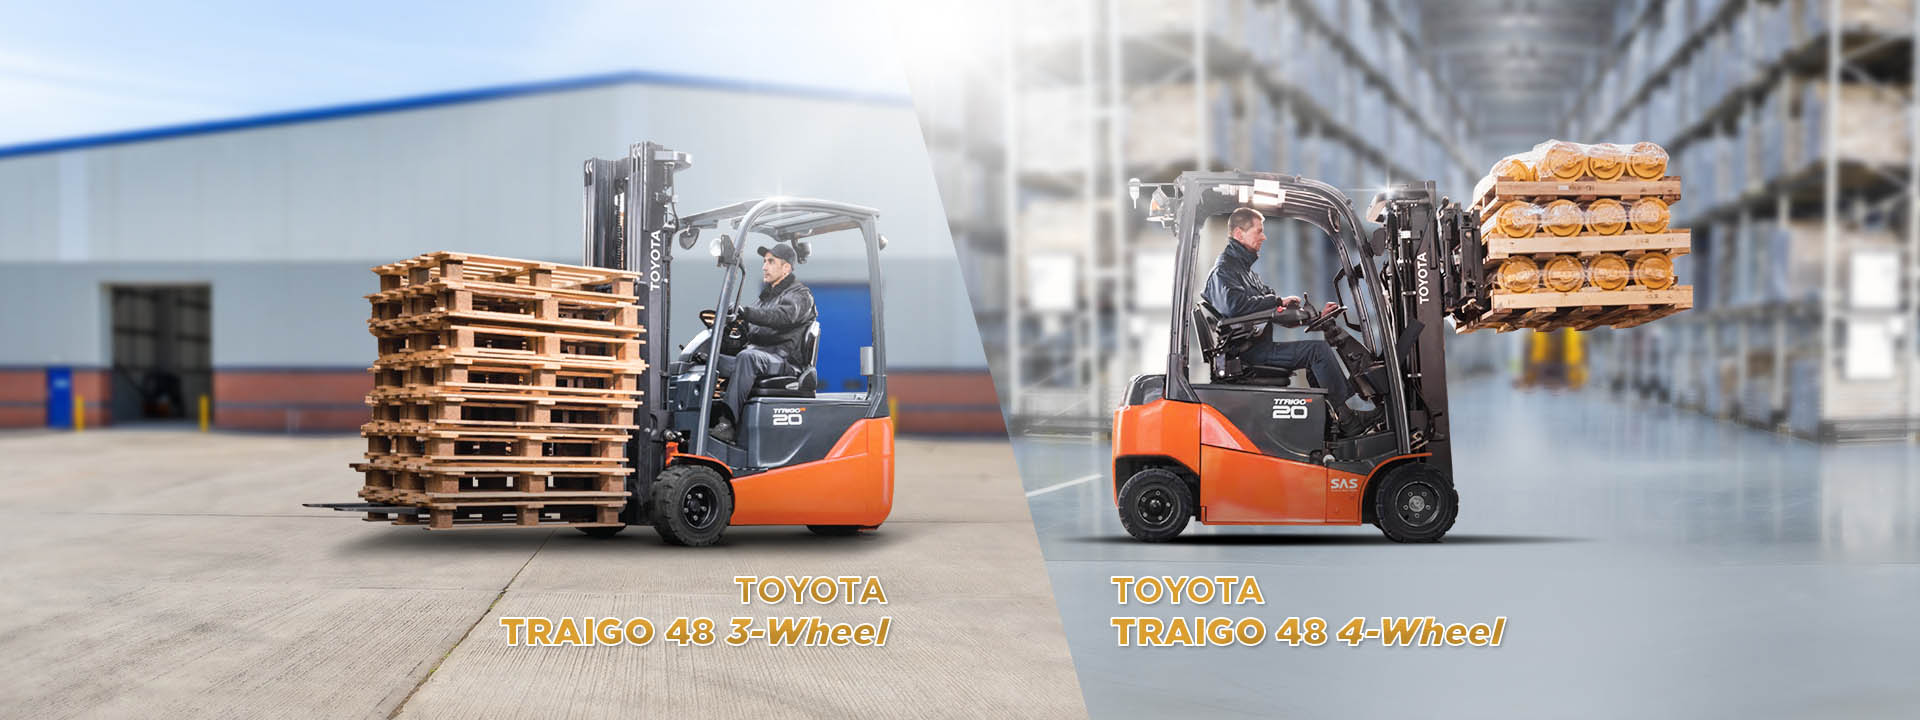 Features of toyota forklift traigo 48 3 wheel and 4 wheel